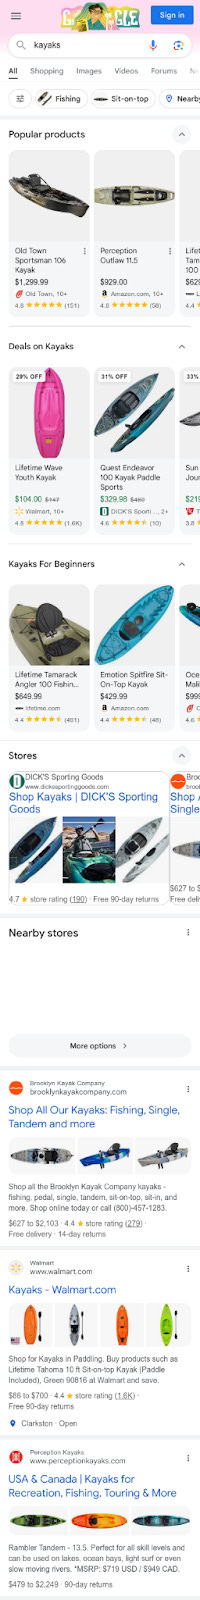 10 kayak 345 - Critical SERP Features Of Google’s Shopping Marketplace